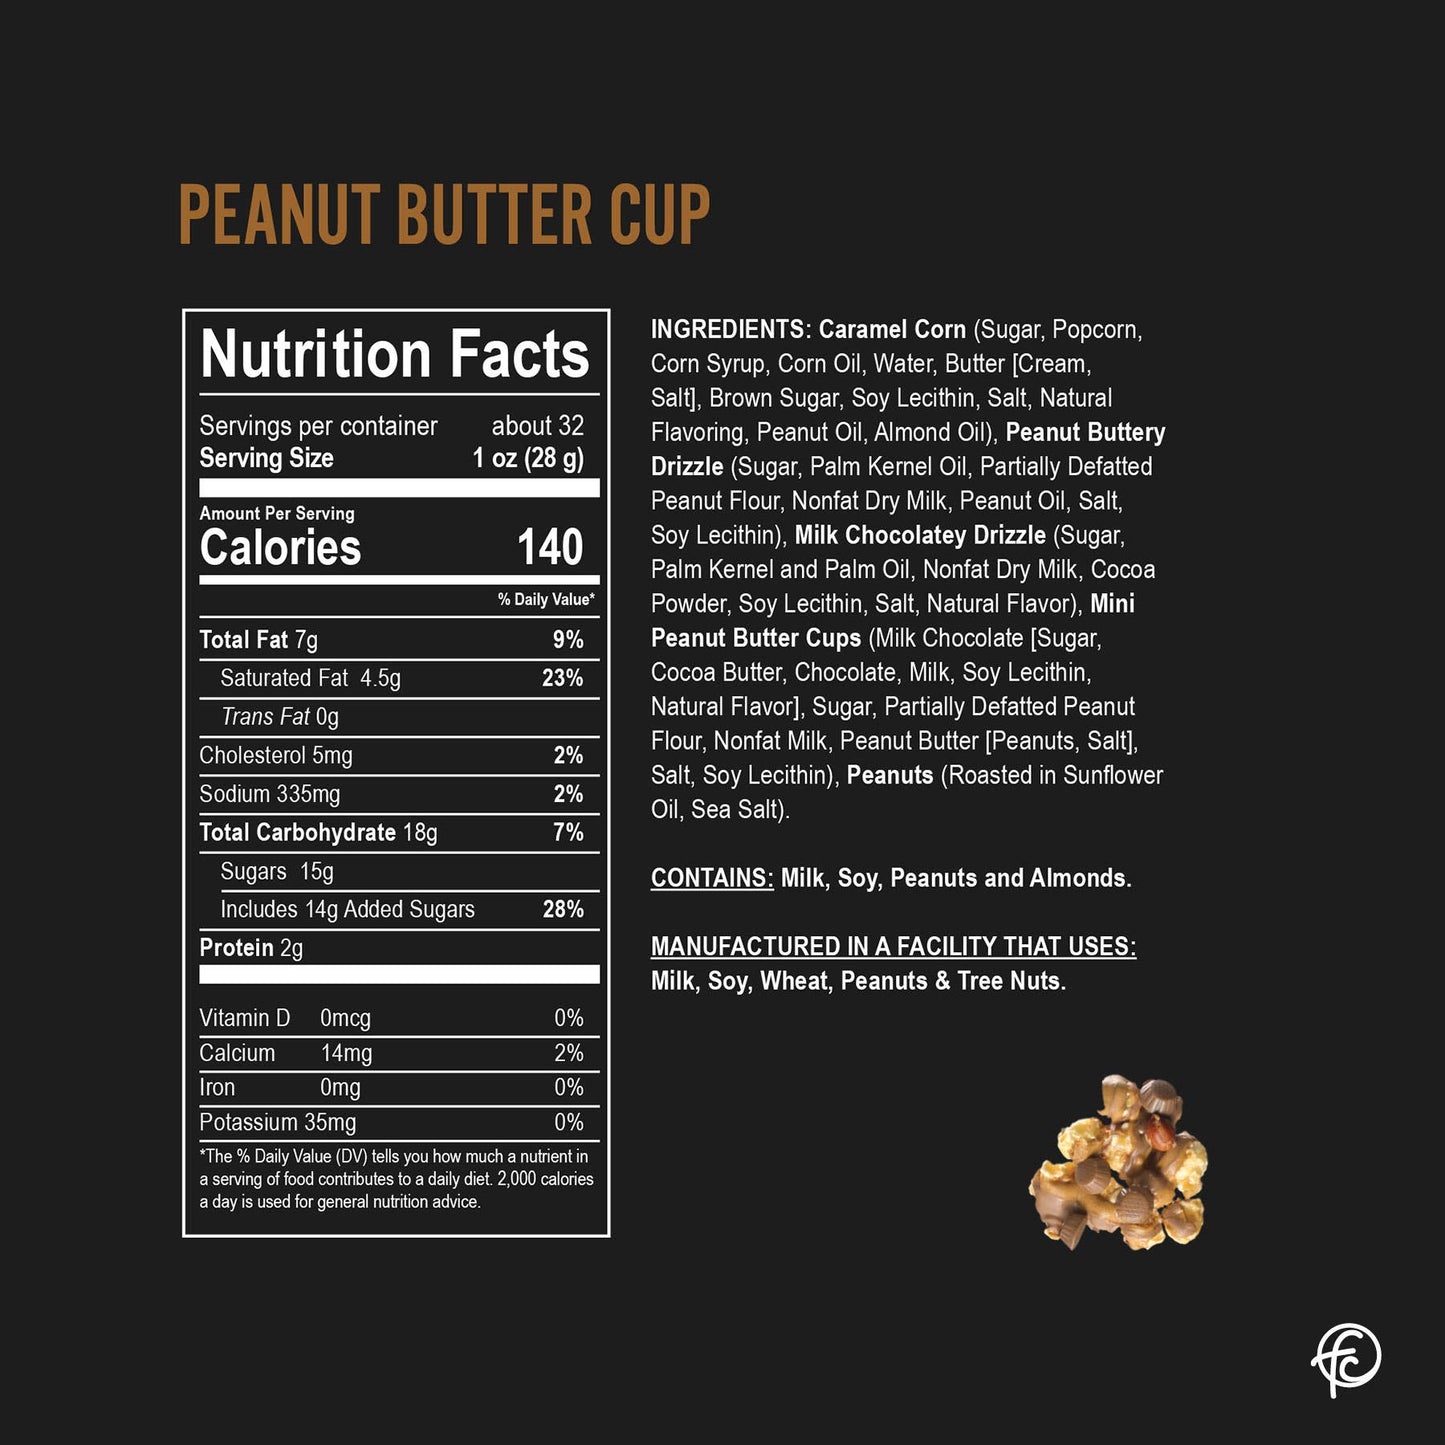 Peanut Butter Cup 5oz Bags | Chocolate Popcorn